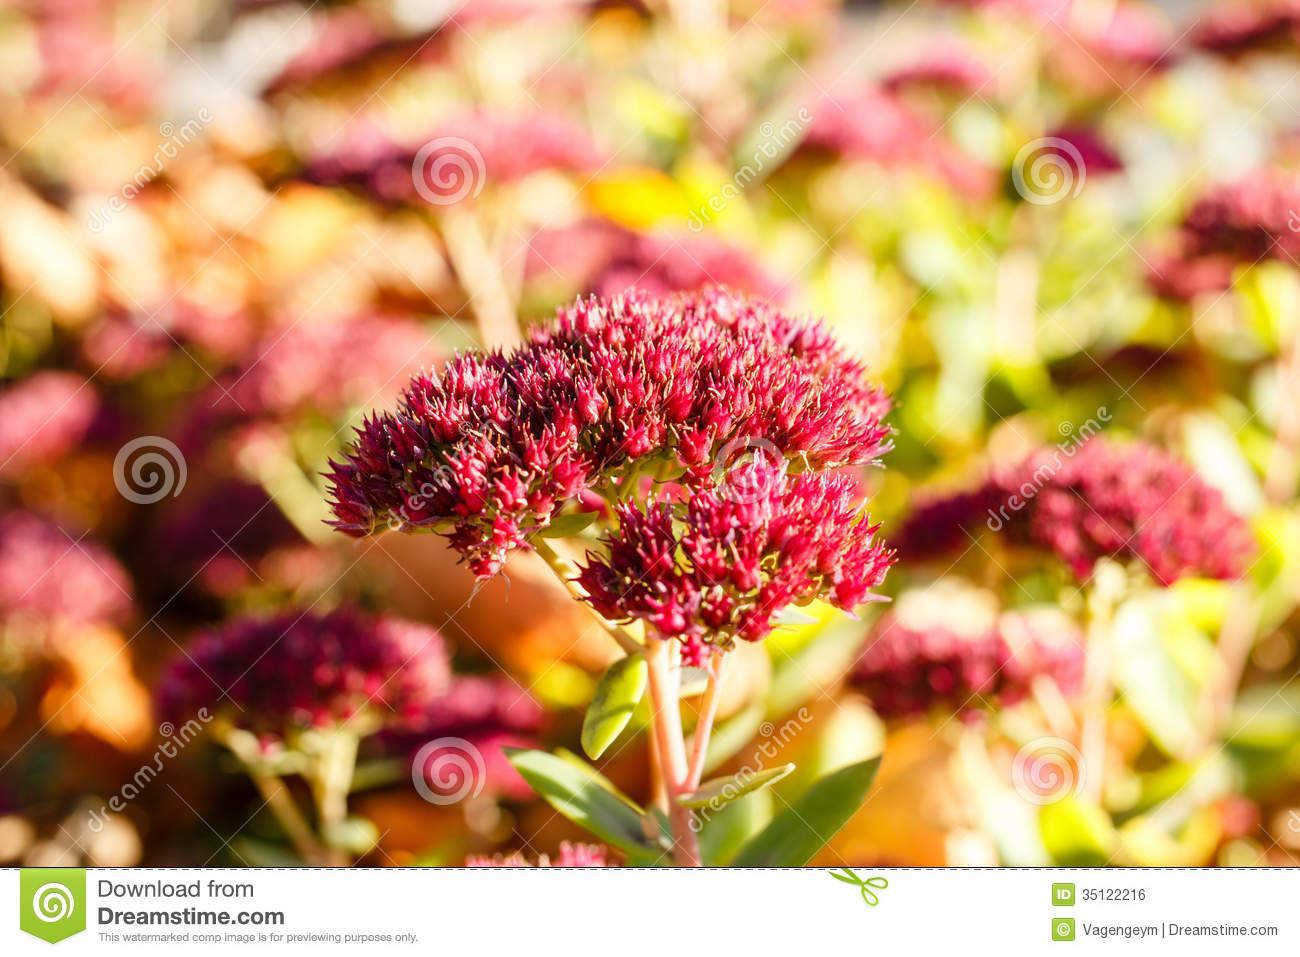 Autumn Flower Royalty Free Stock Image   Image  35122216